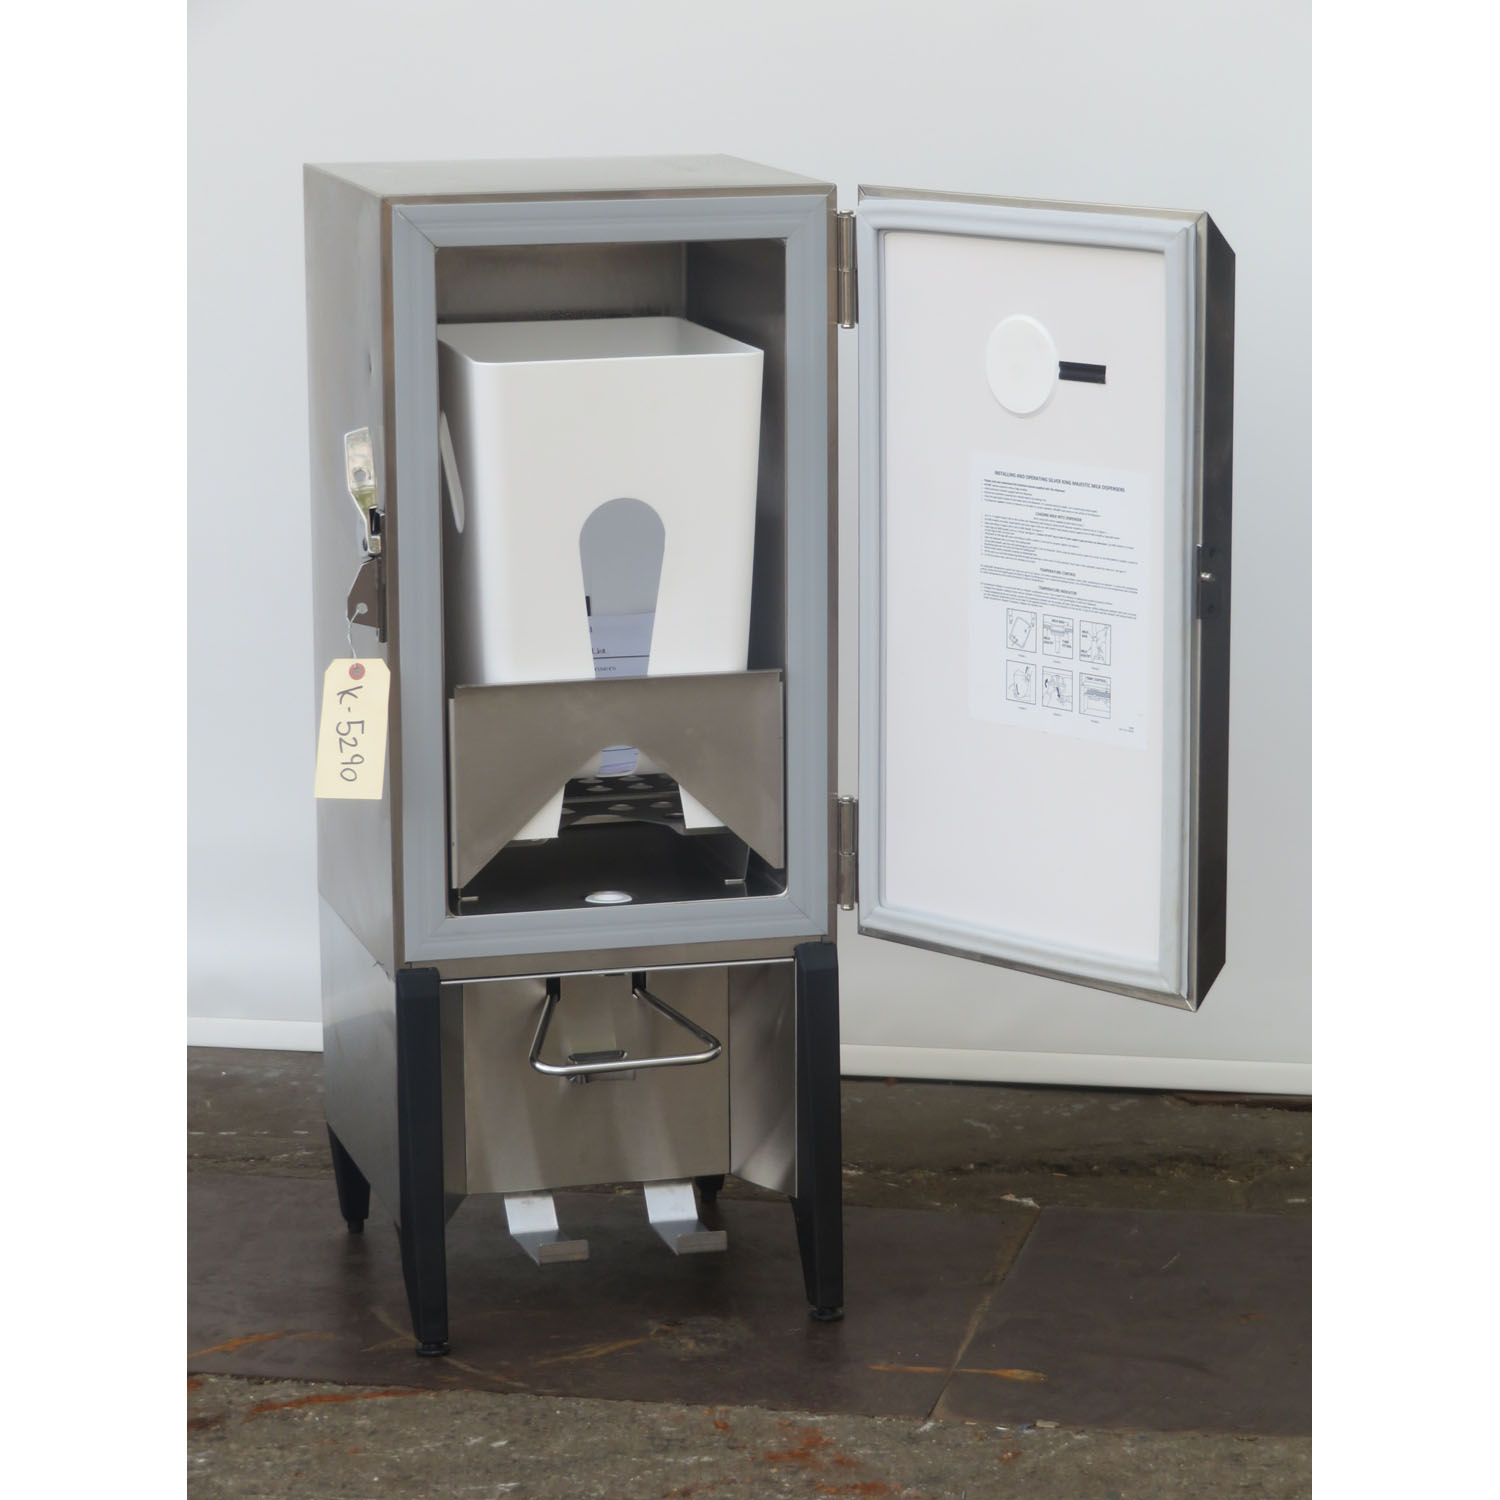 Silver King SKMAJ1-C4 Milk Dispenser, Used Excellent Condition image 1